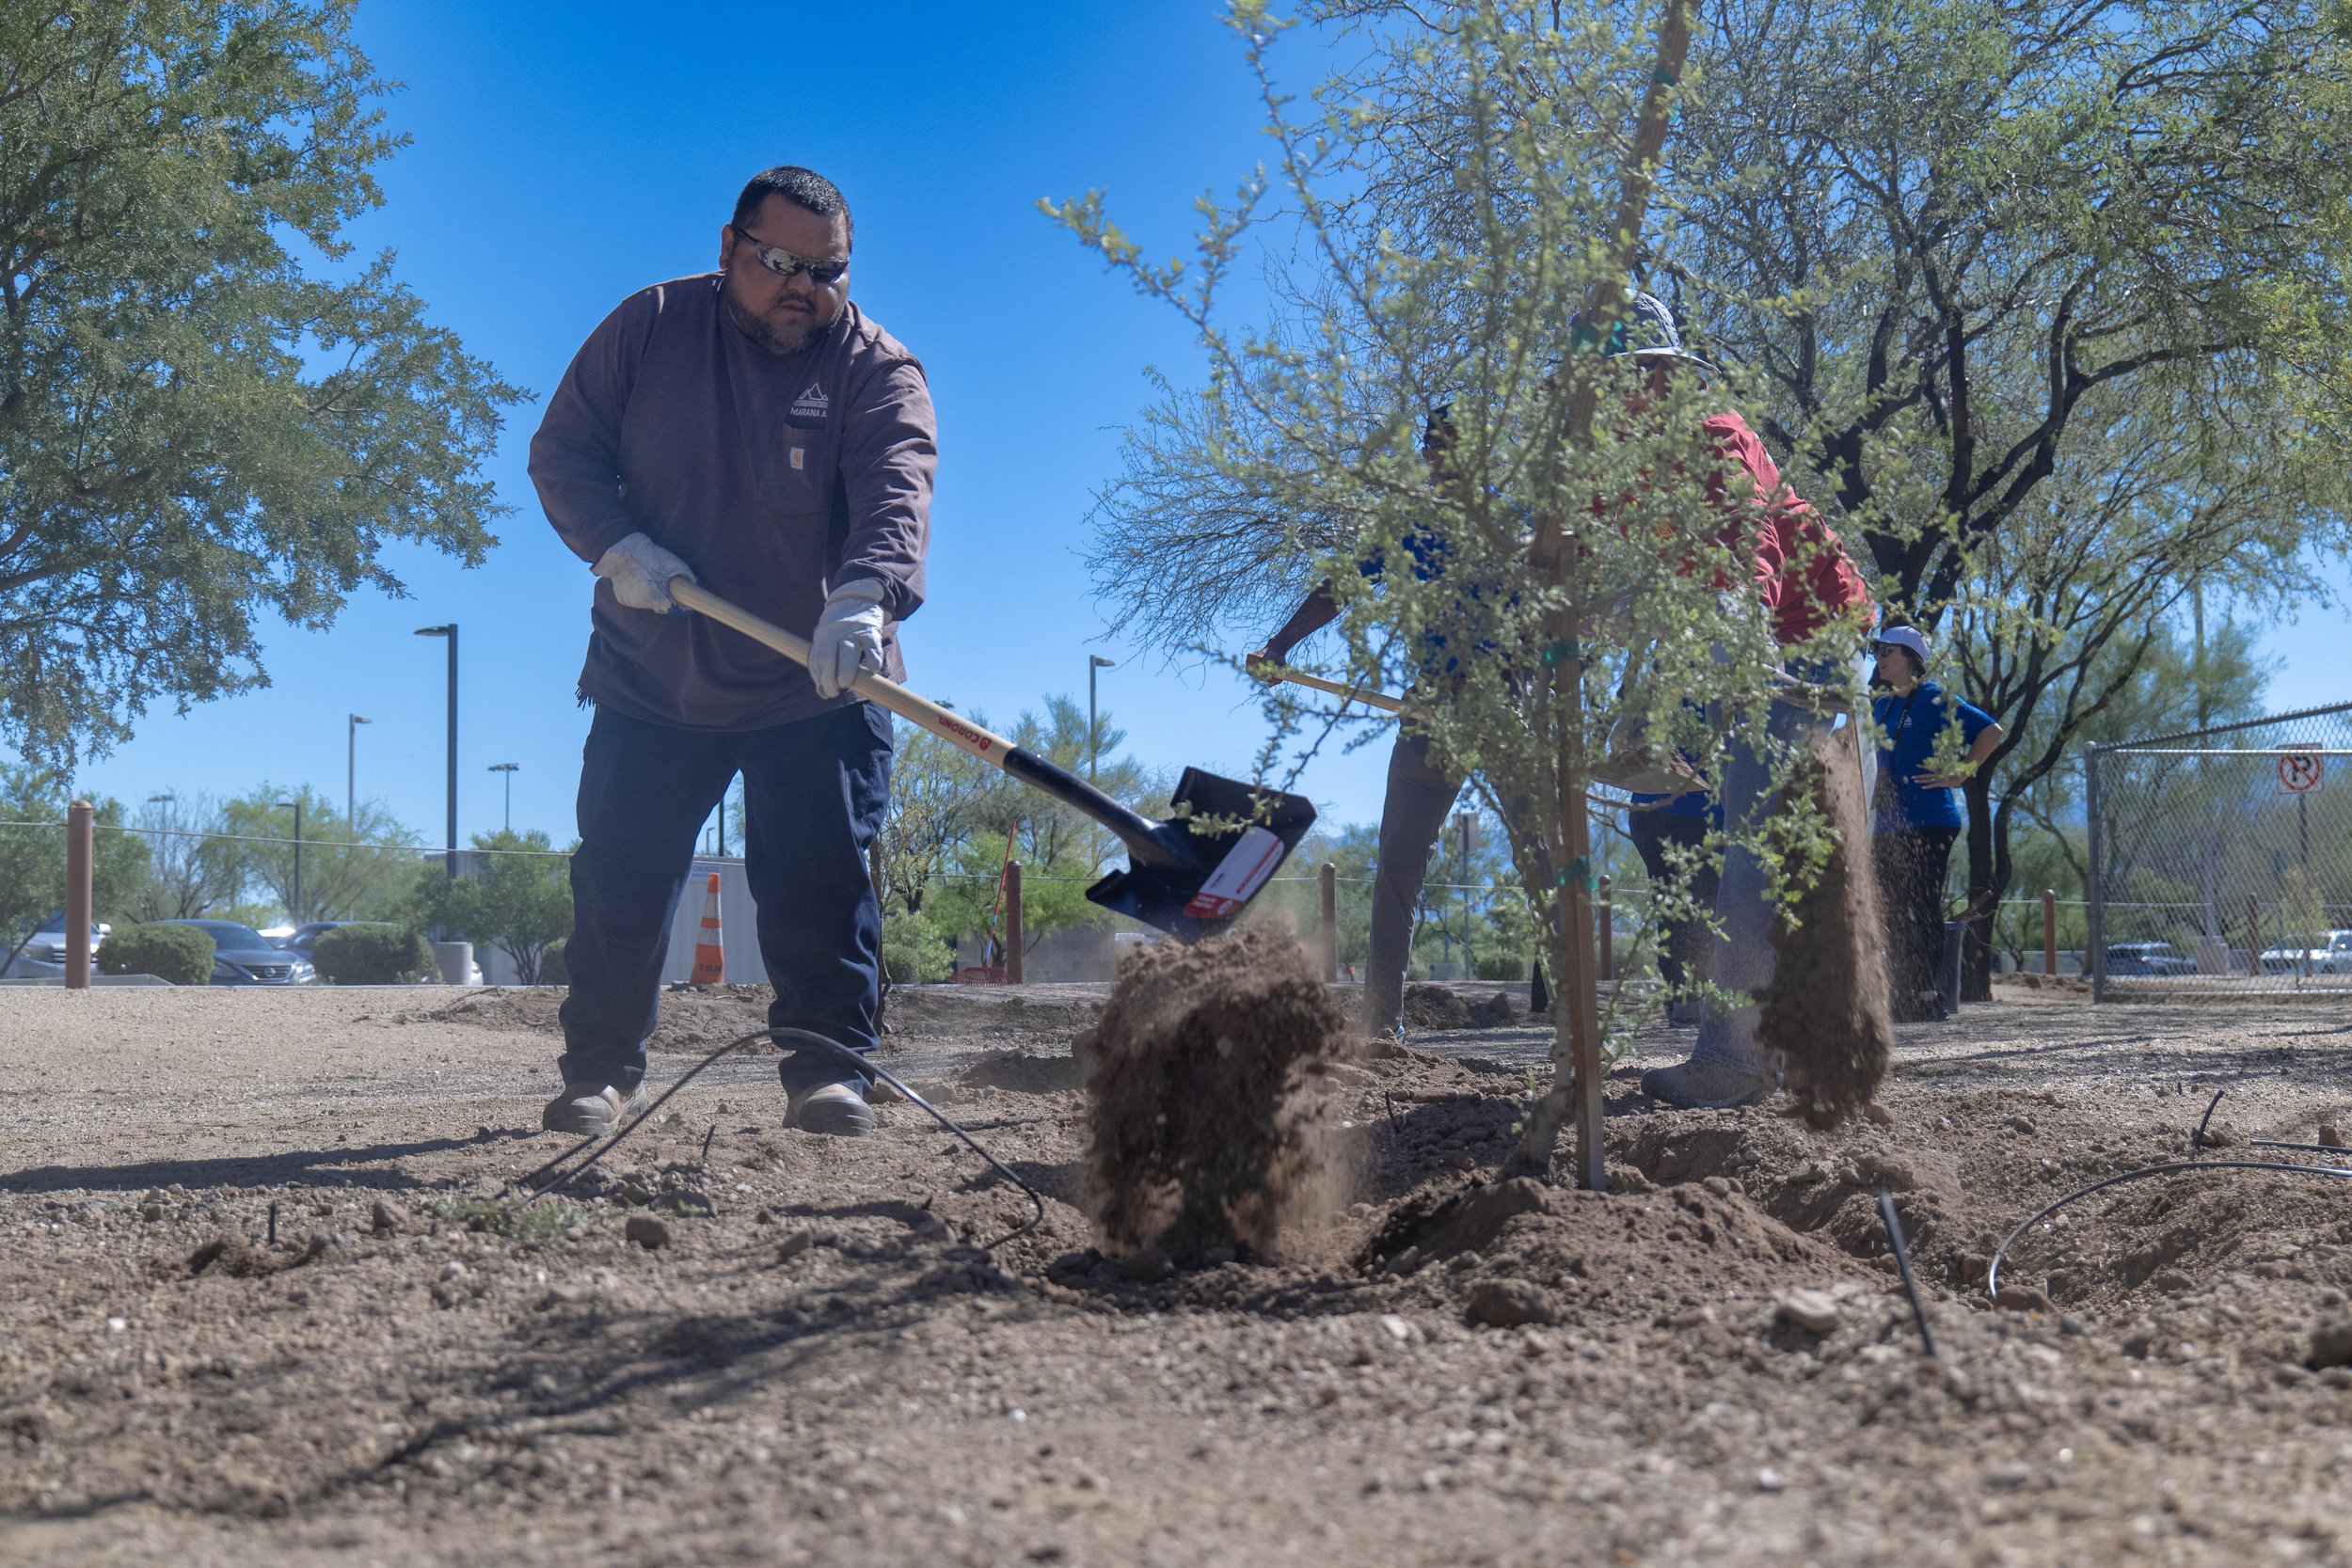 Parks Maintenance staff and volunteers plant trees